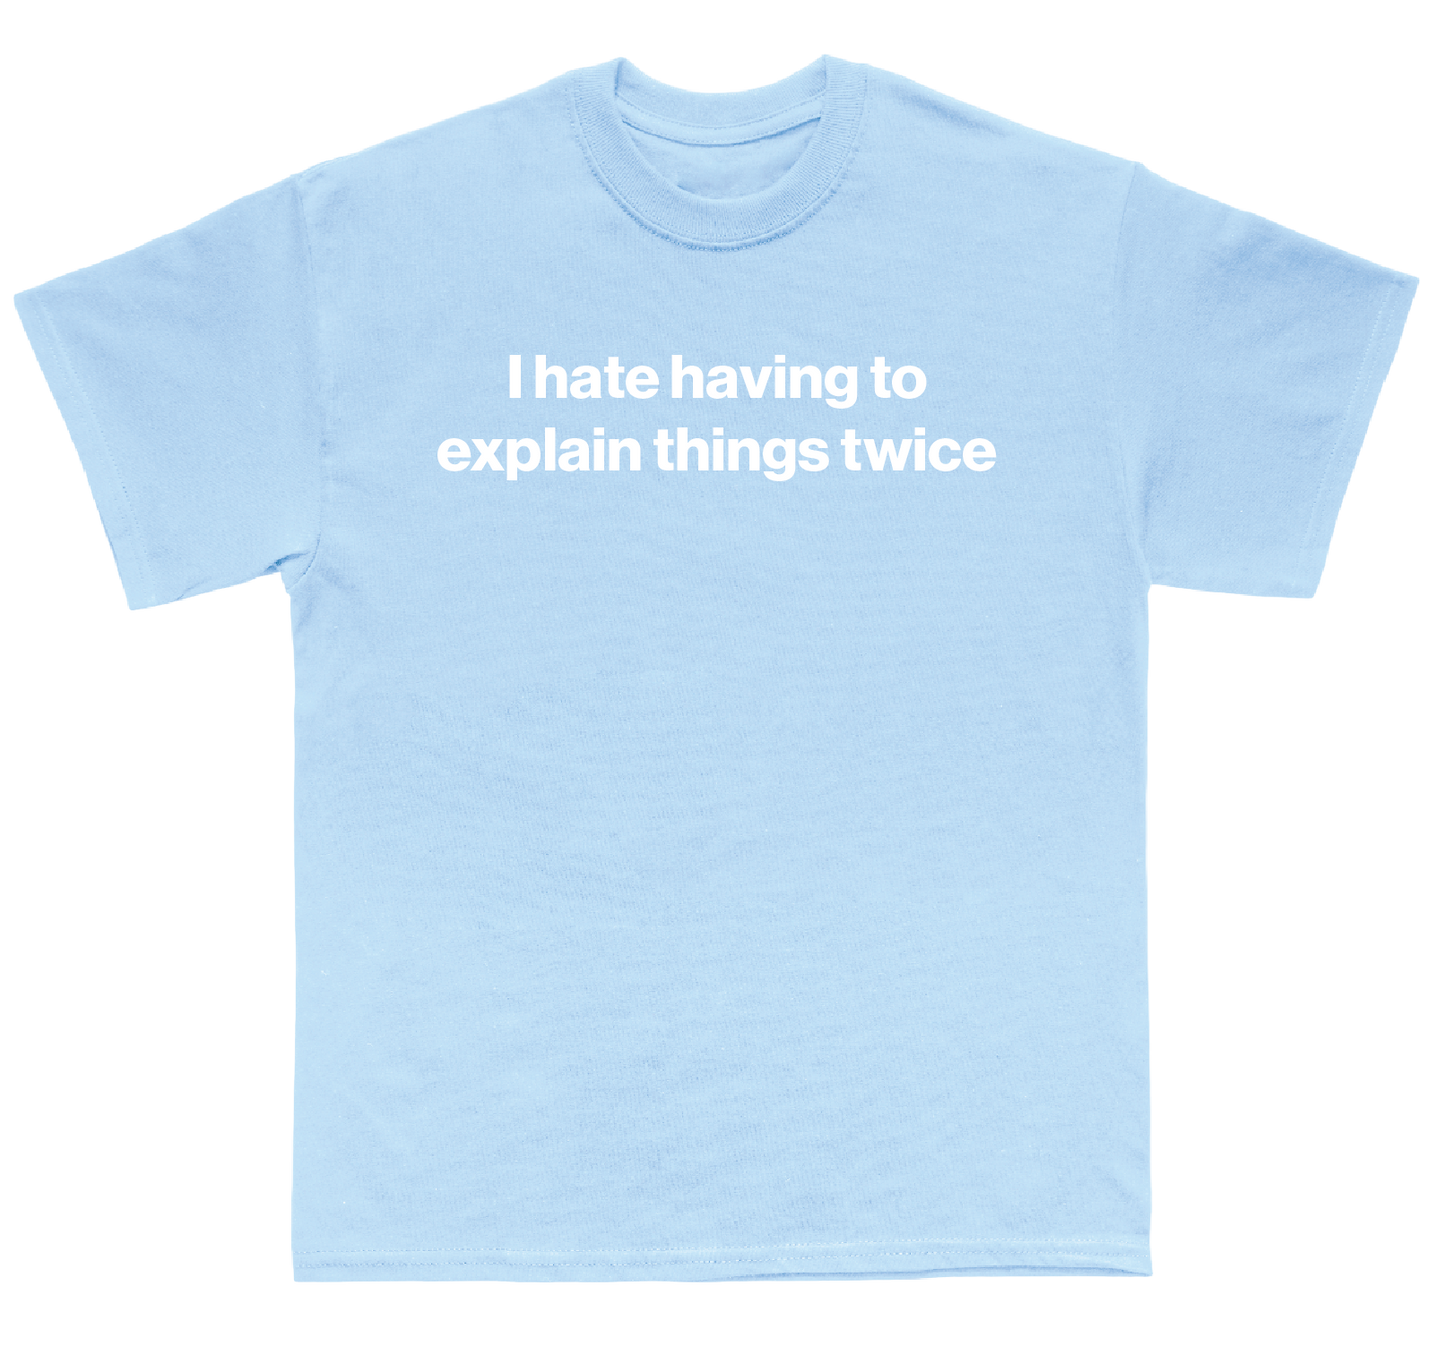 I hate having to explain things twice shirt